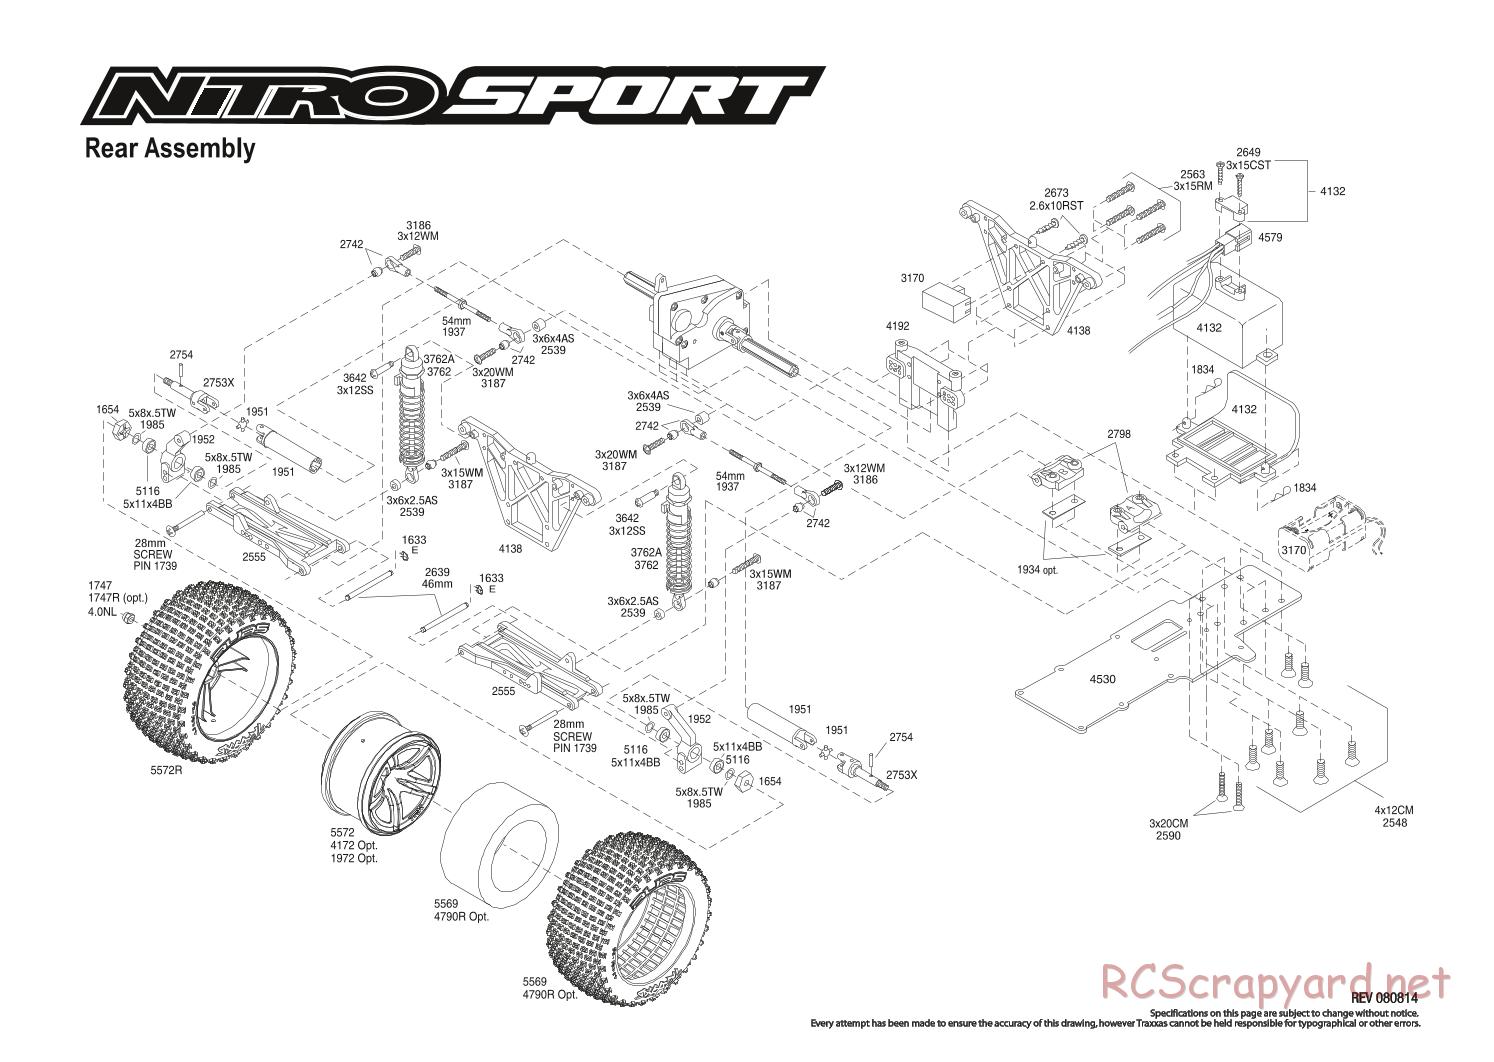 Traxxas - Nitro Sport - Exploded Views - Page 3